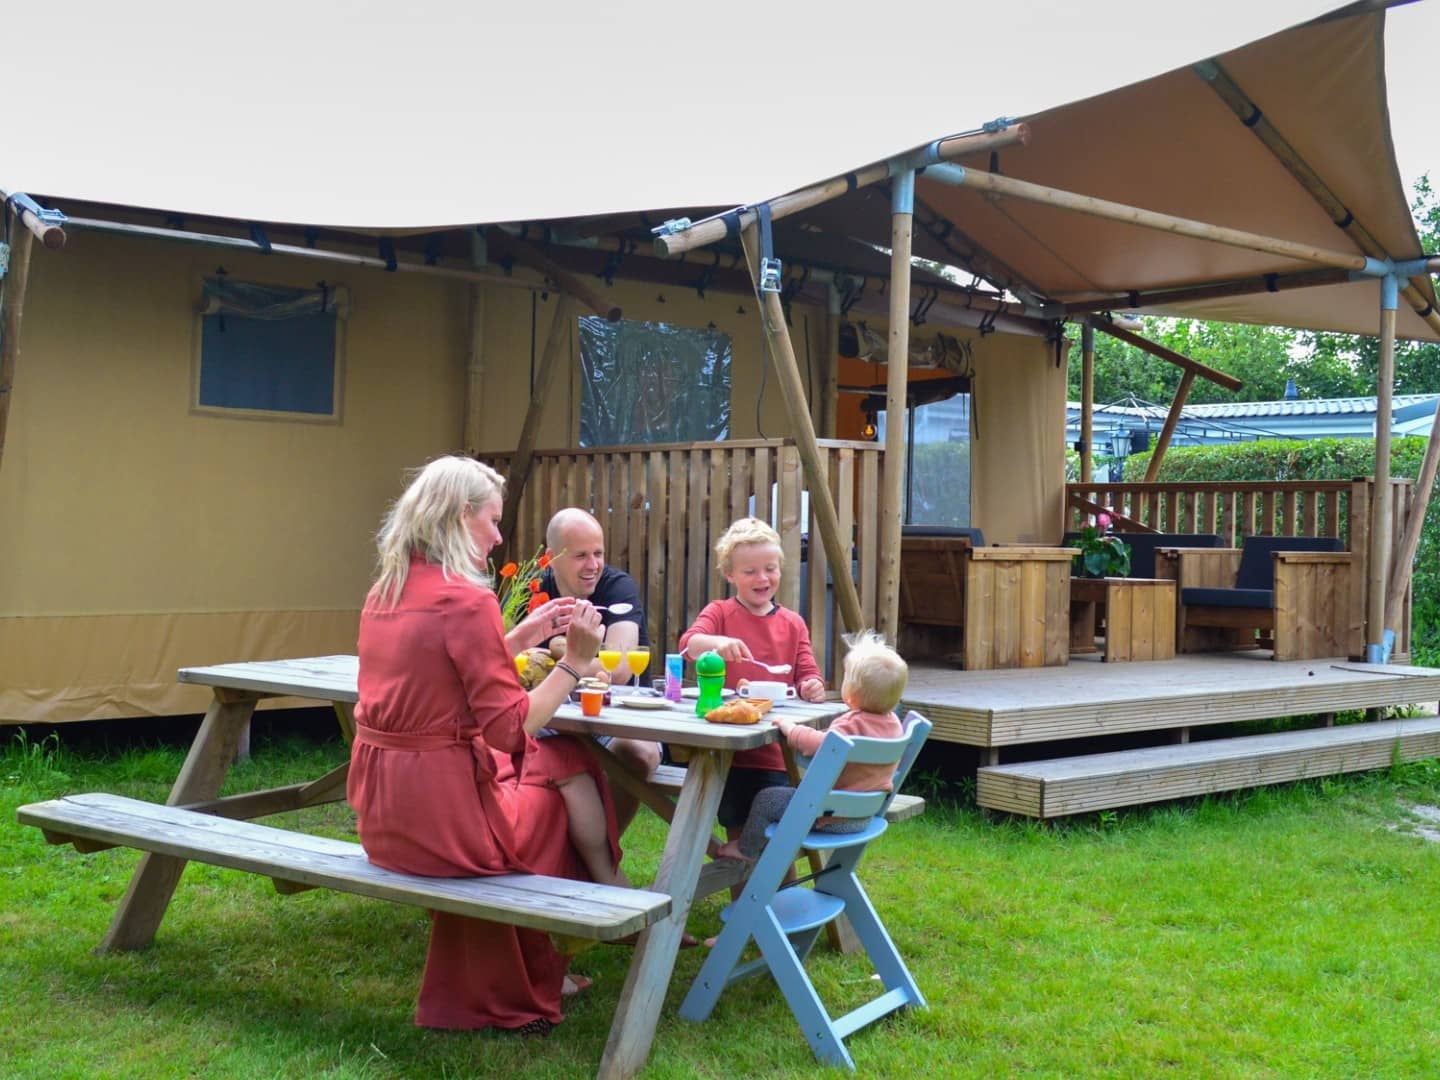 sahara stay camping westland vlugtenburg zuid holland kamperen safaritent nederland